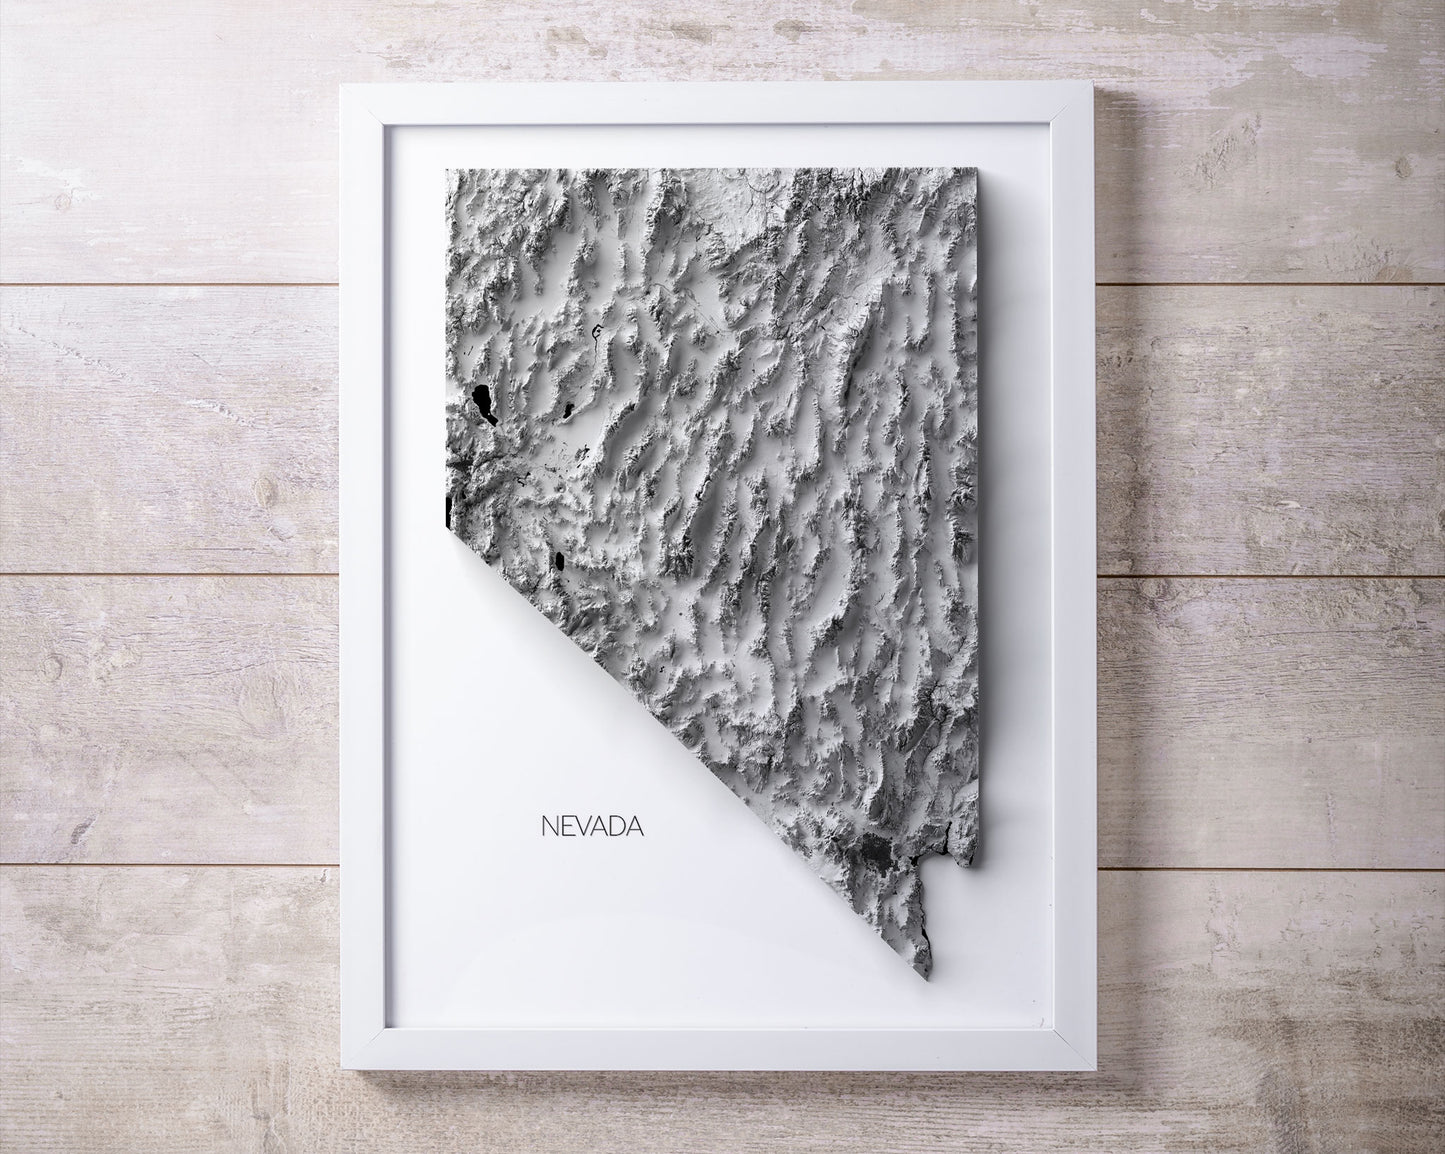 Nevada Elevation Map